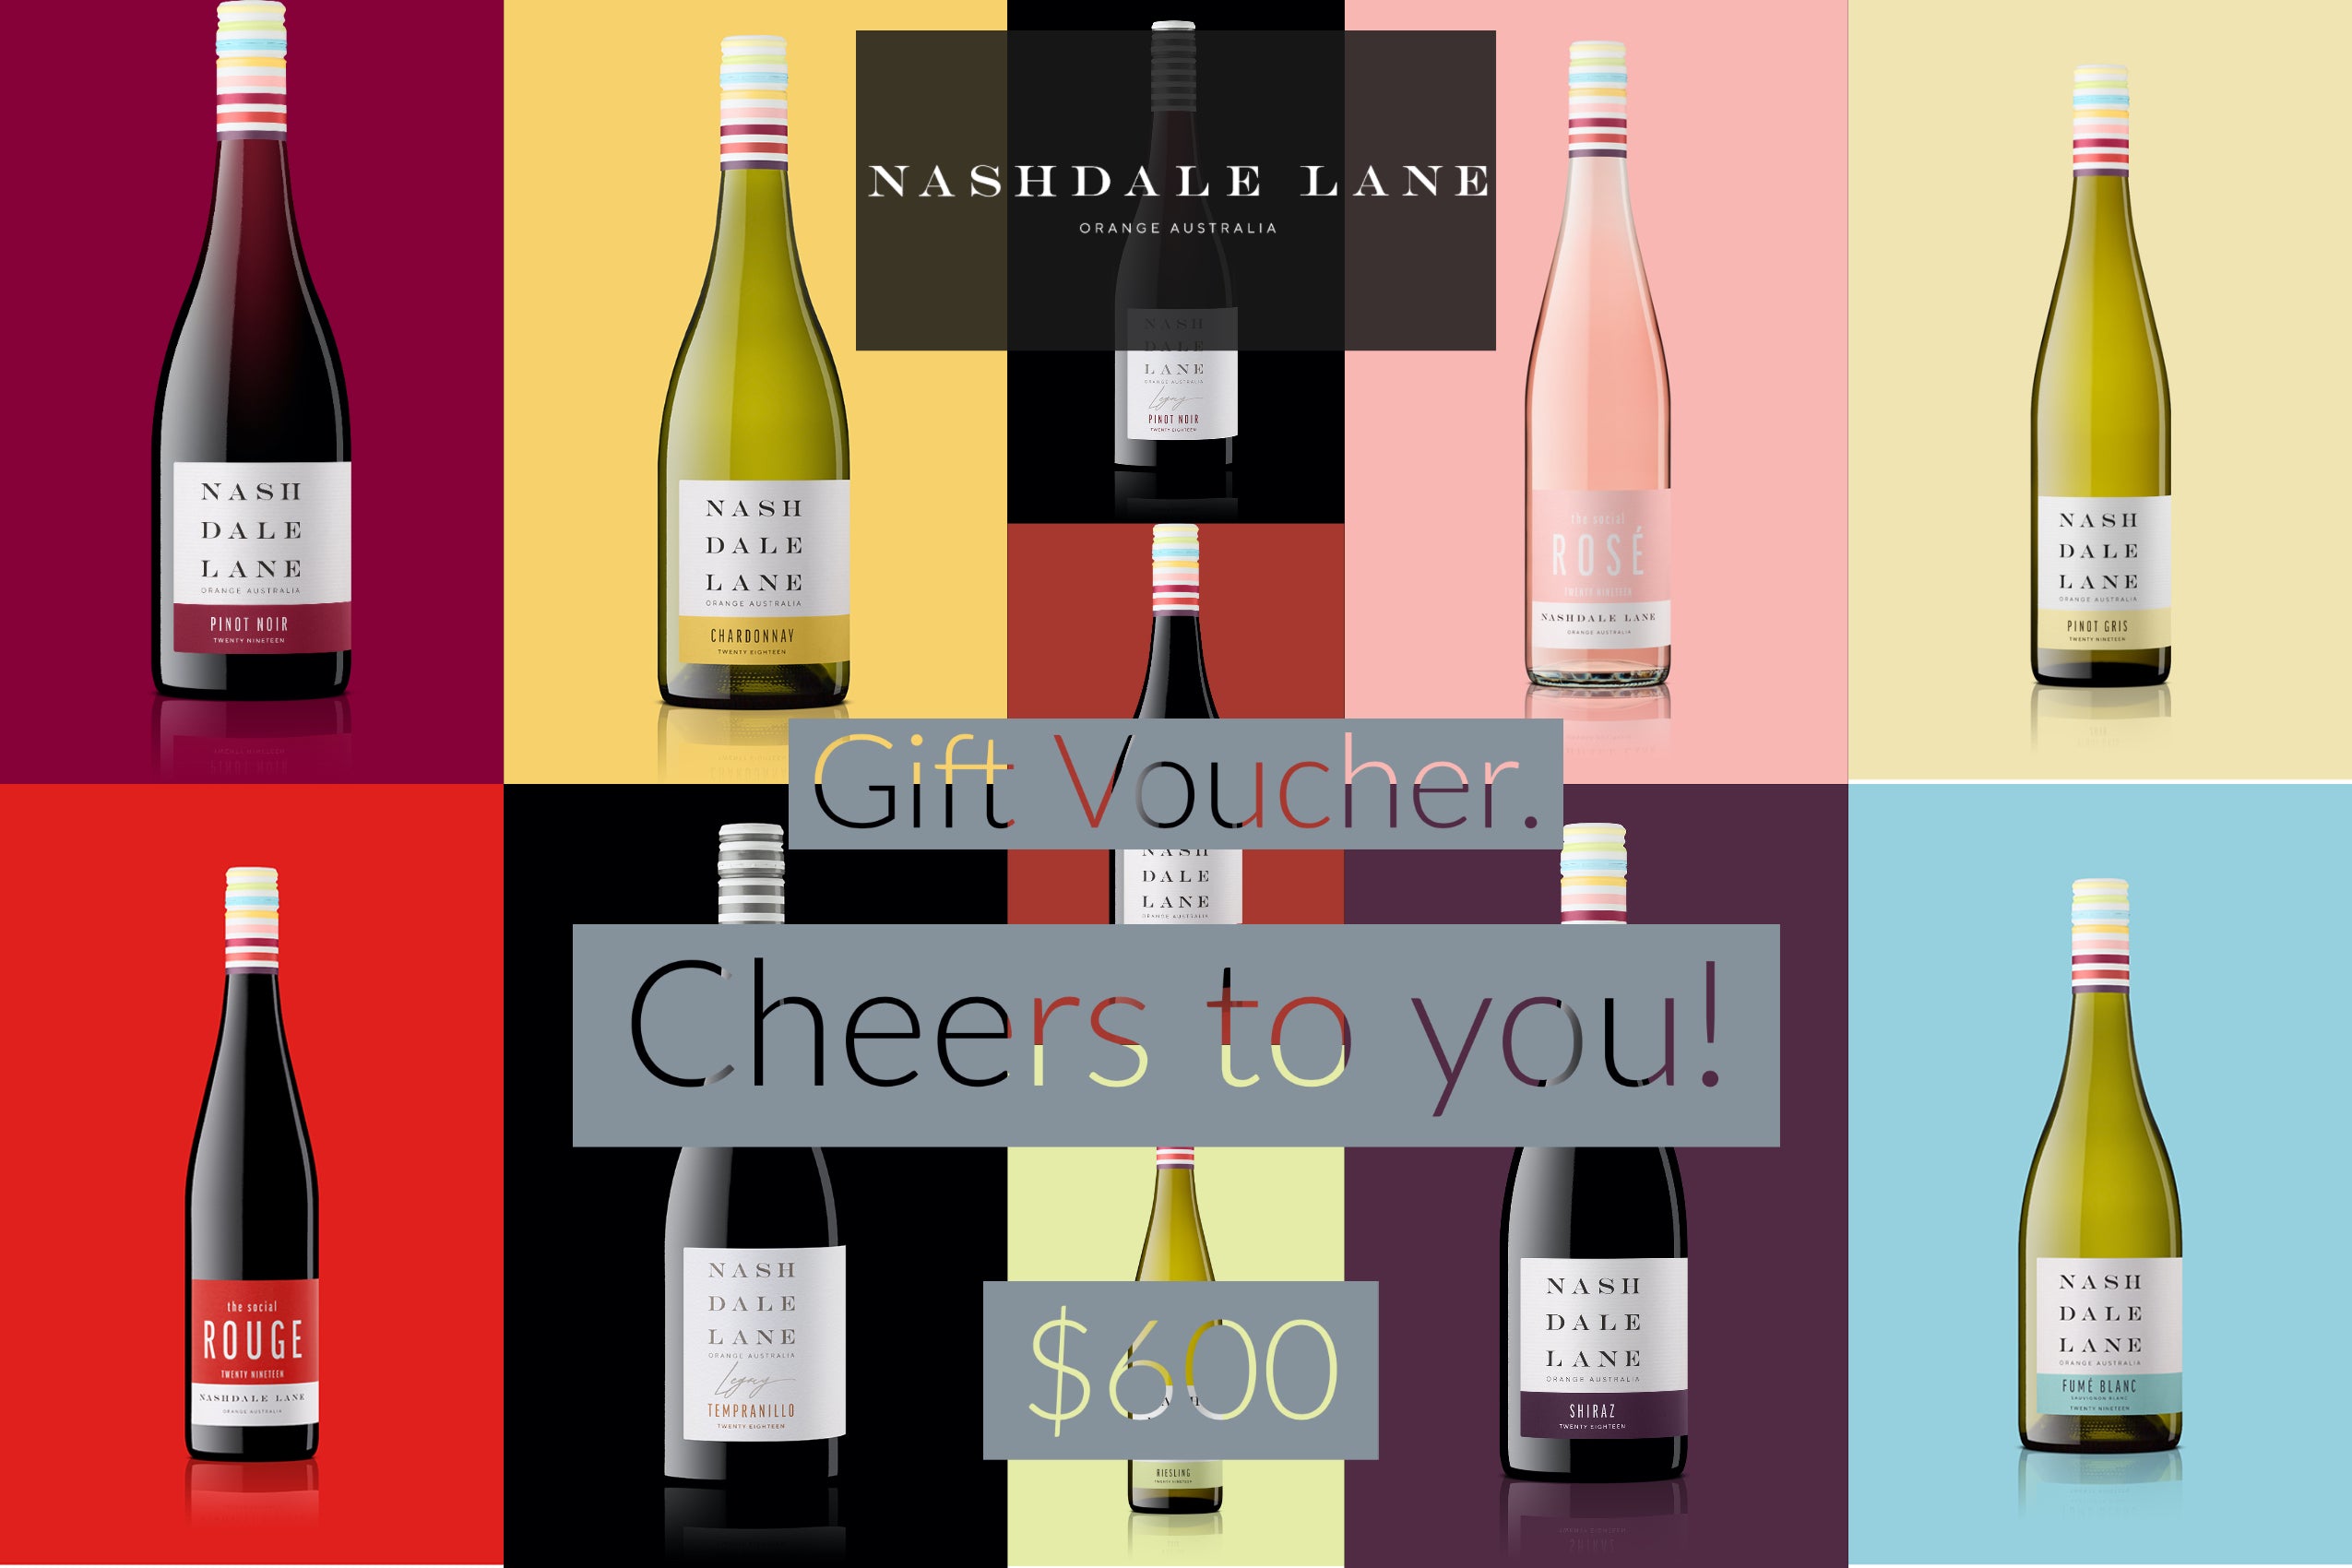 Nashdale Lane Wines Gift Voucher $600